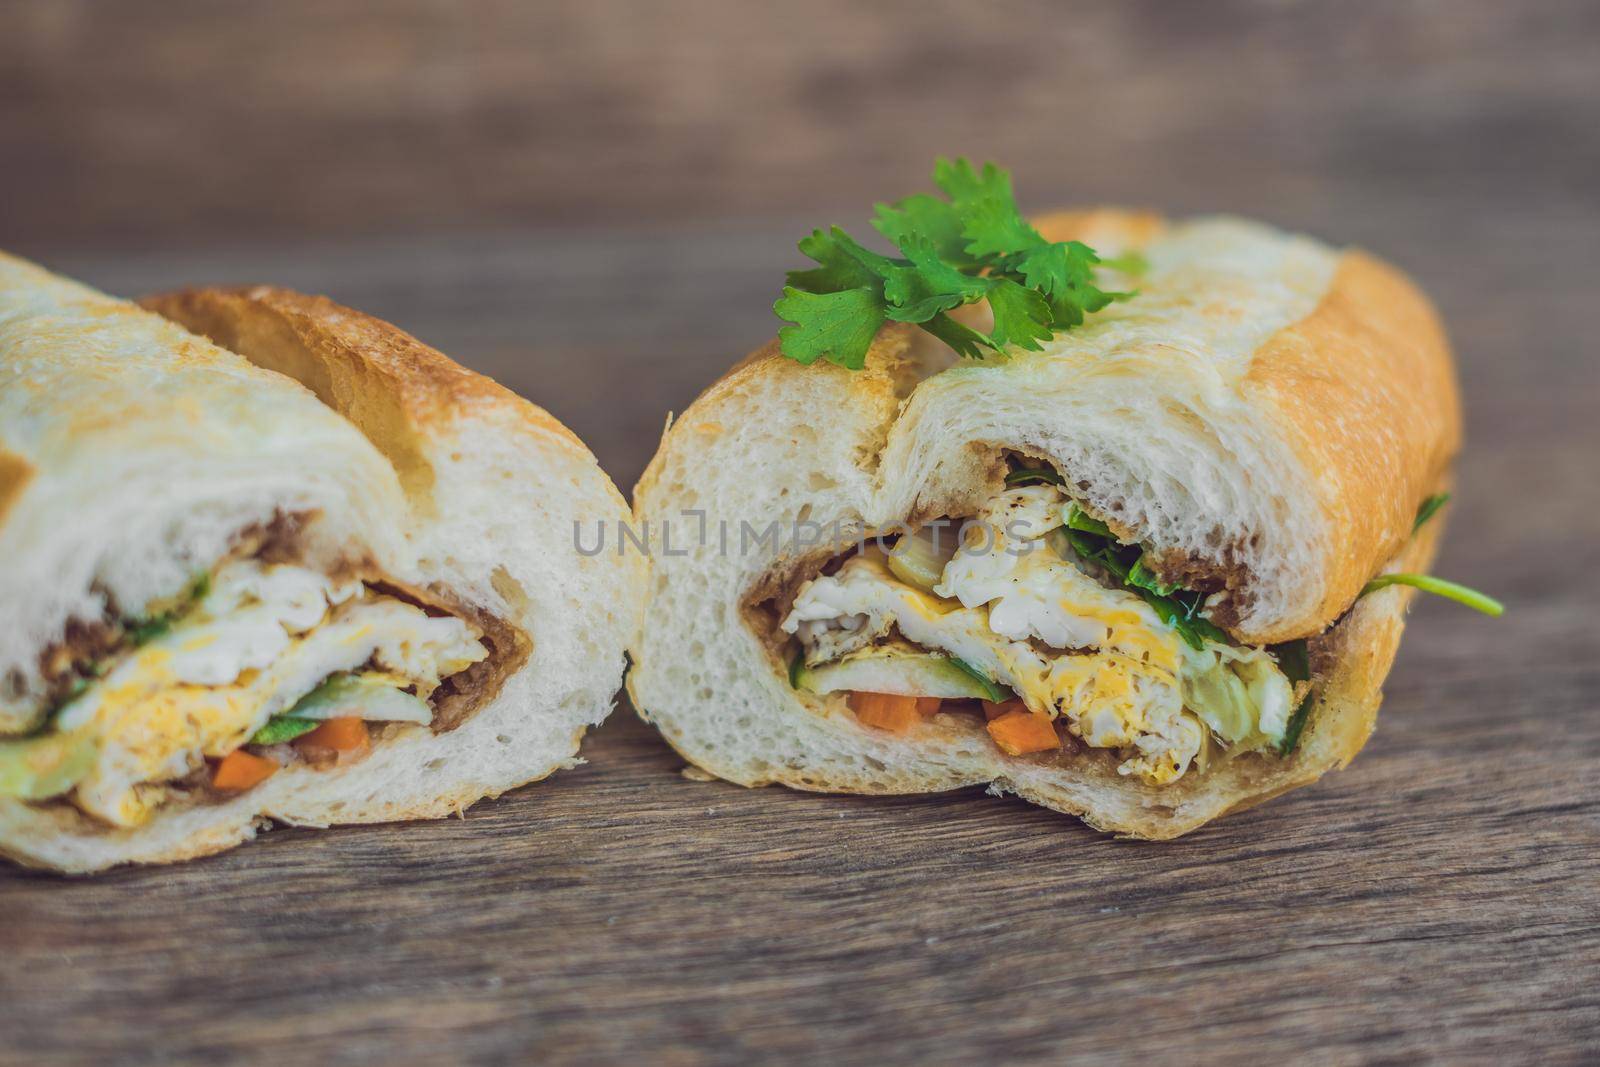 A delicious Vietnamese Bahn Mi sandwich on a wooden background.